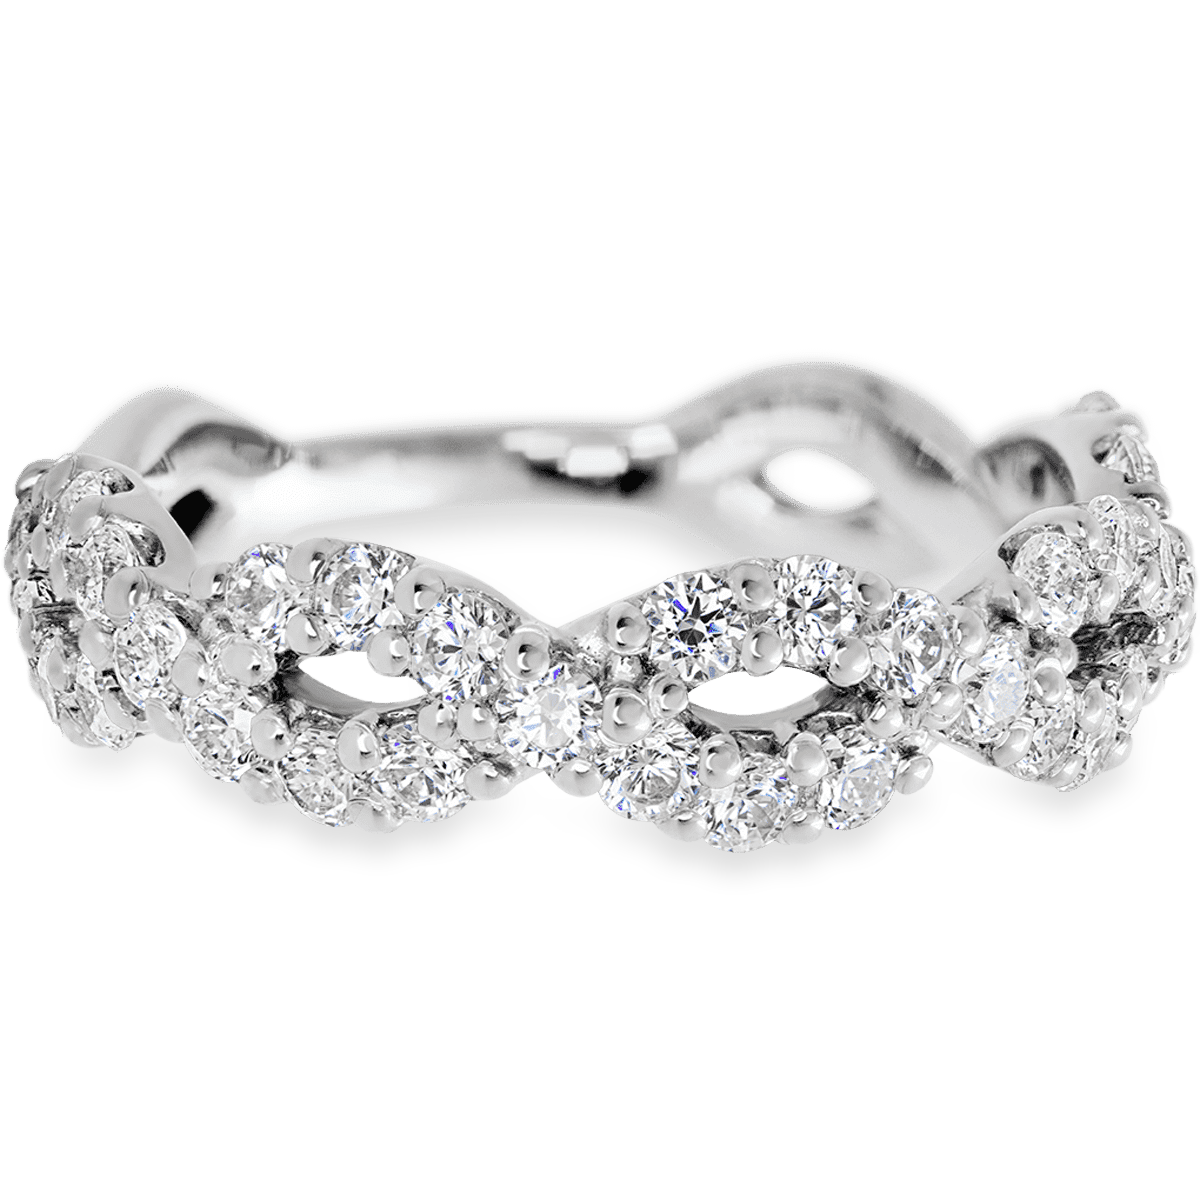 Braided 14k White Gold + White Diamonds Womens Wedding or Everyday Ring